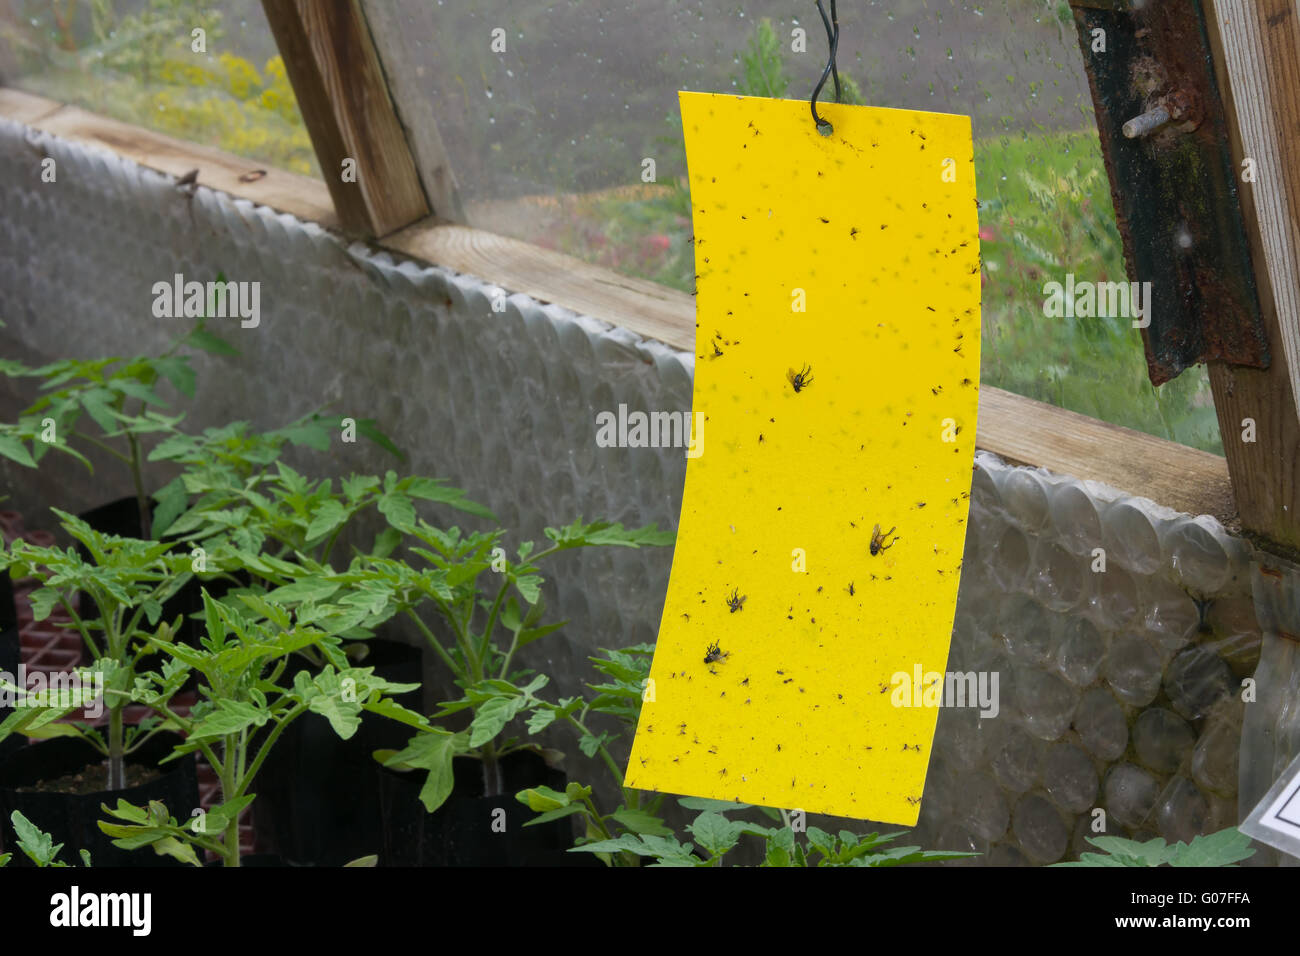 https://c8.alamy.com/comp/G07FFA/yellow-sticky-fly-trap-hanging-inside-a-greenhouse-G07FFA.jpg